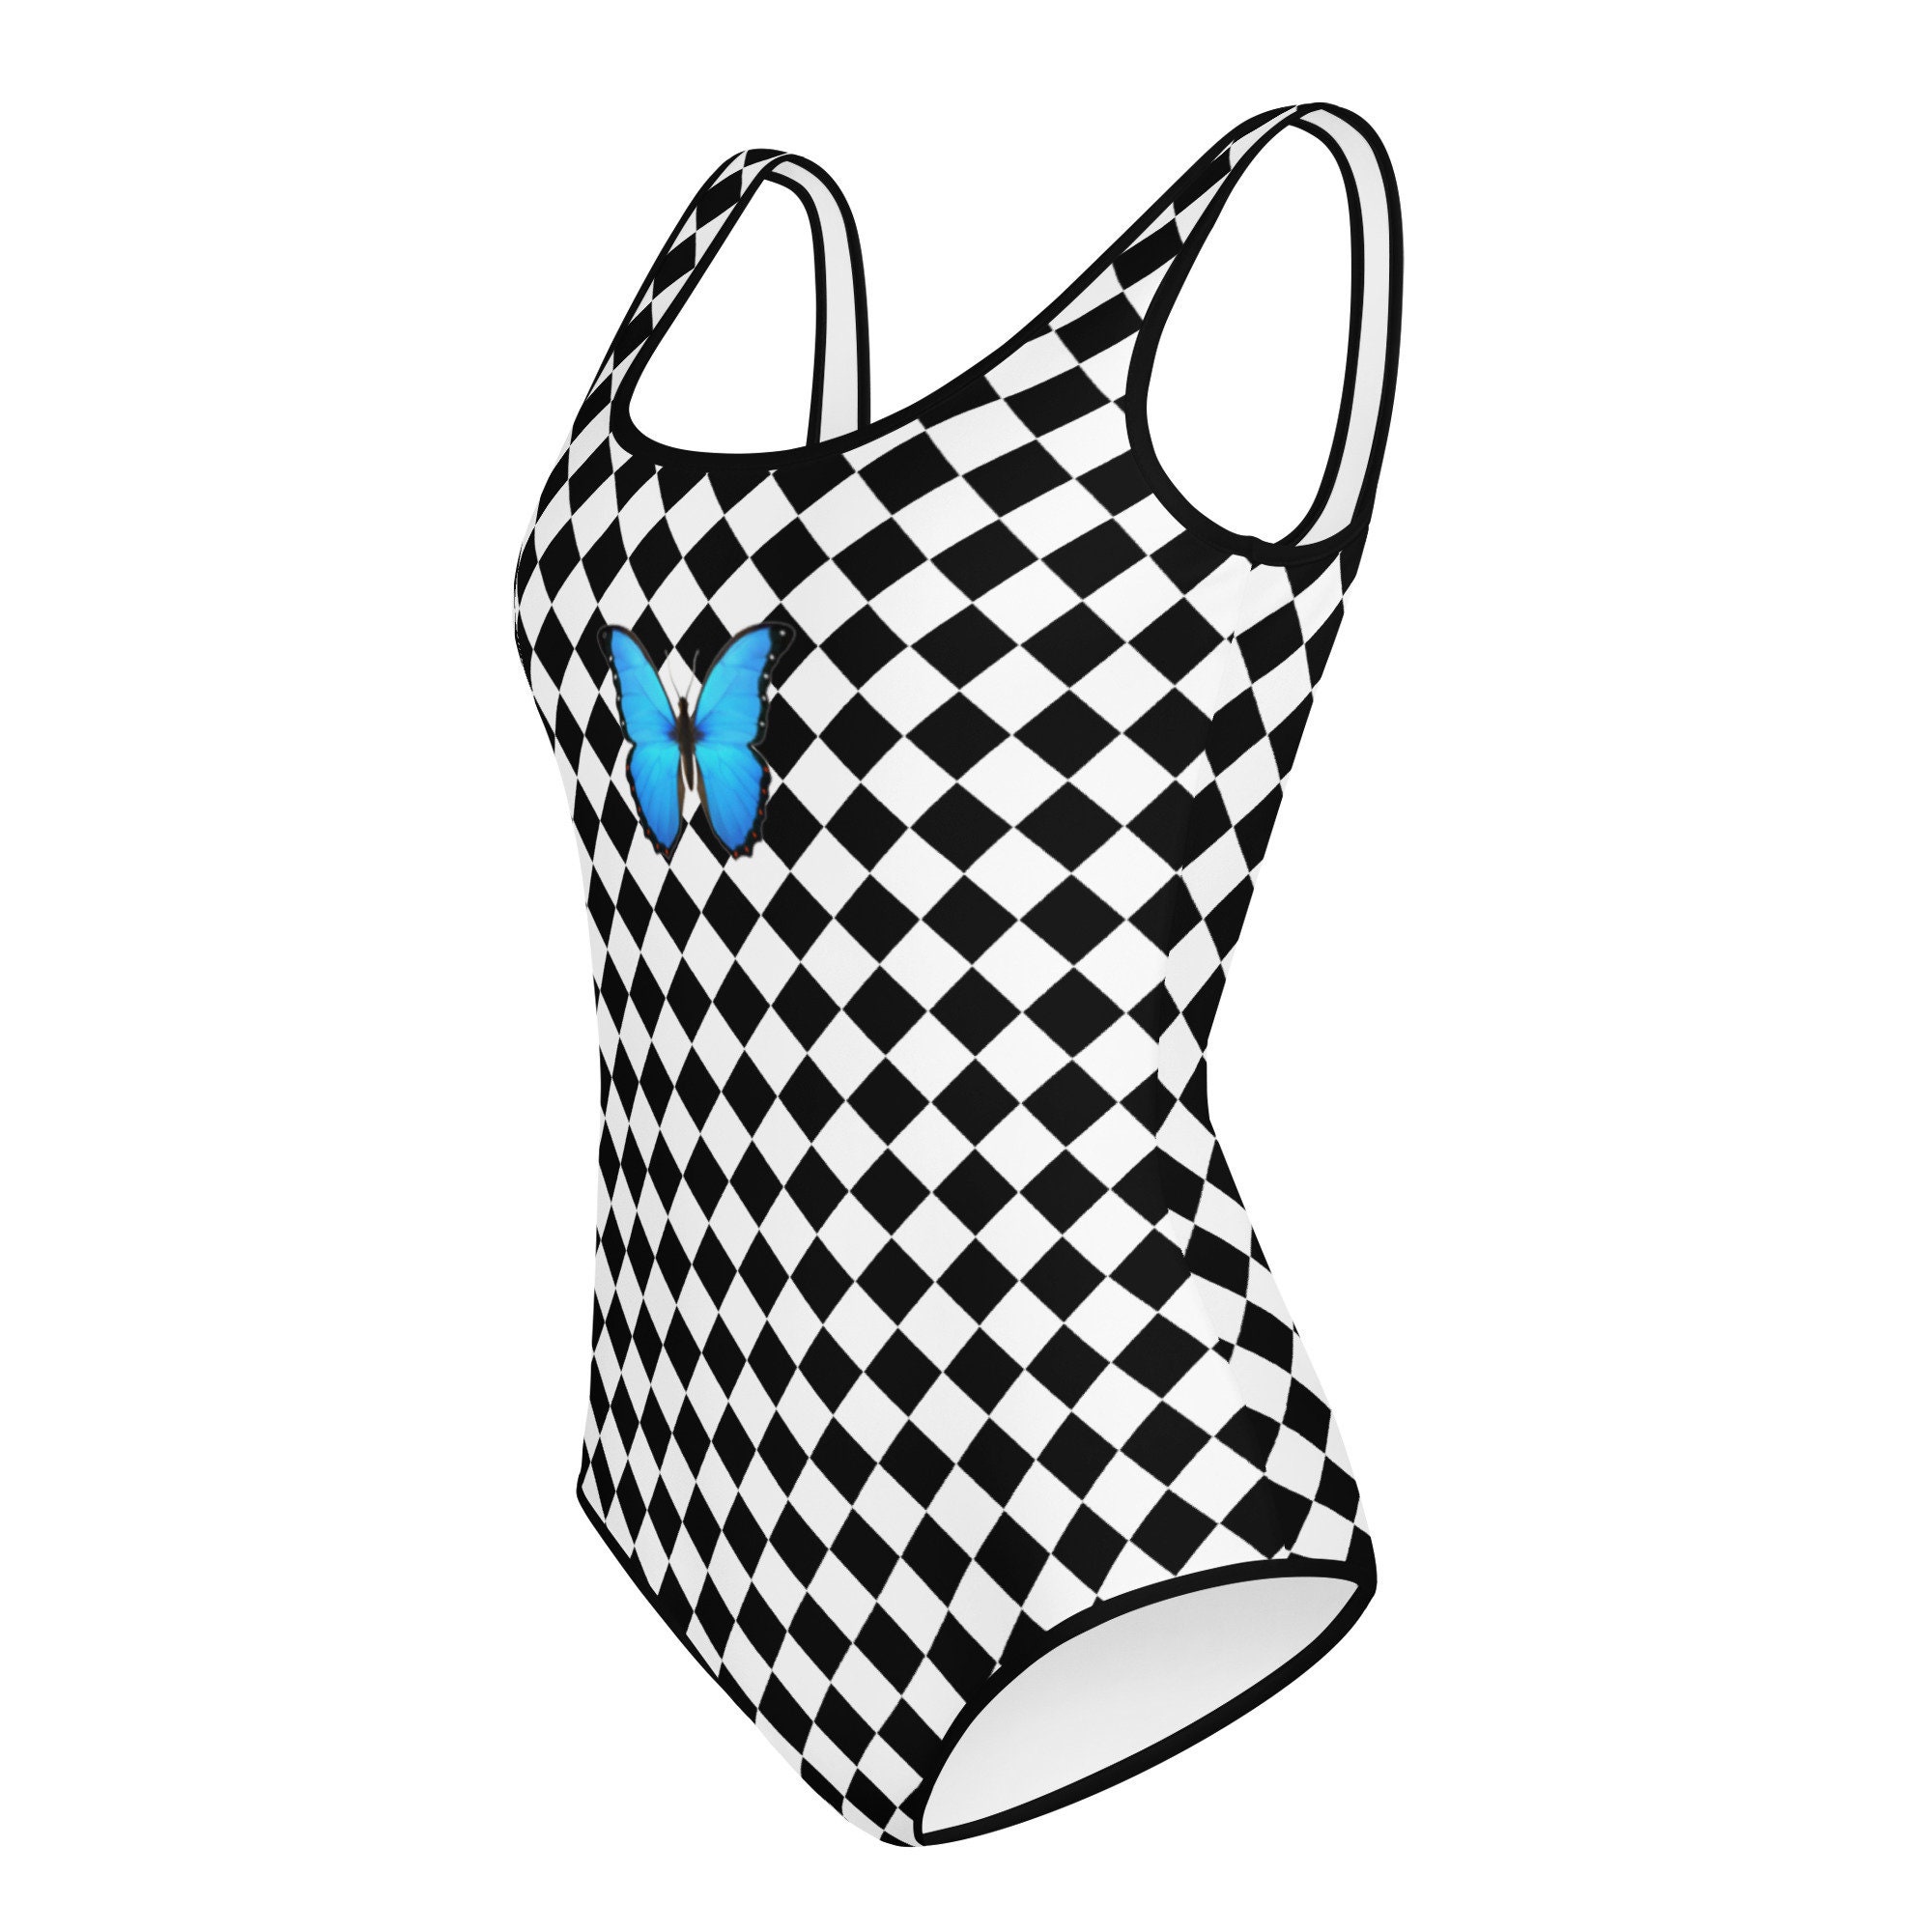 Checker Print Teen Swimsuit Modest One Piece Tween Bathing Suit Girls Black  & White Checkered Racing Flag, Gingham, Check Print Swimwear 